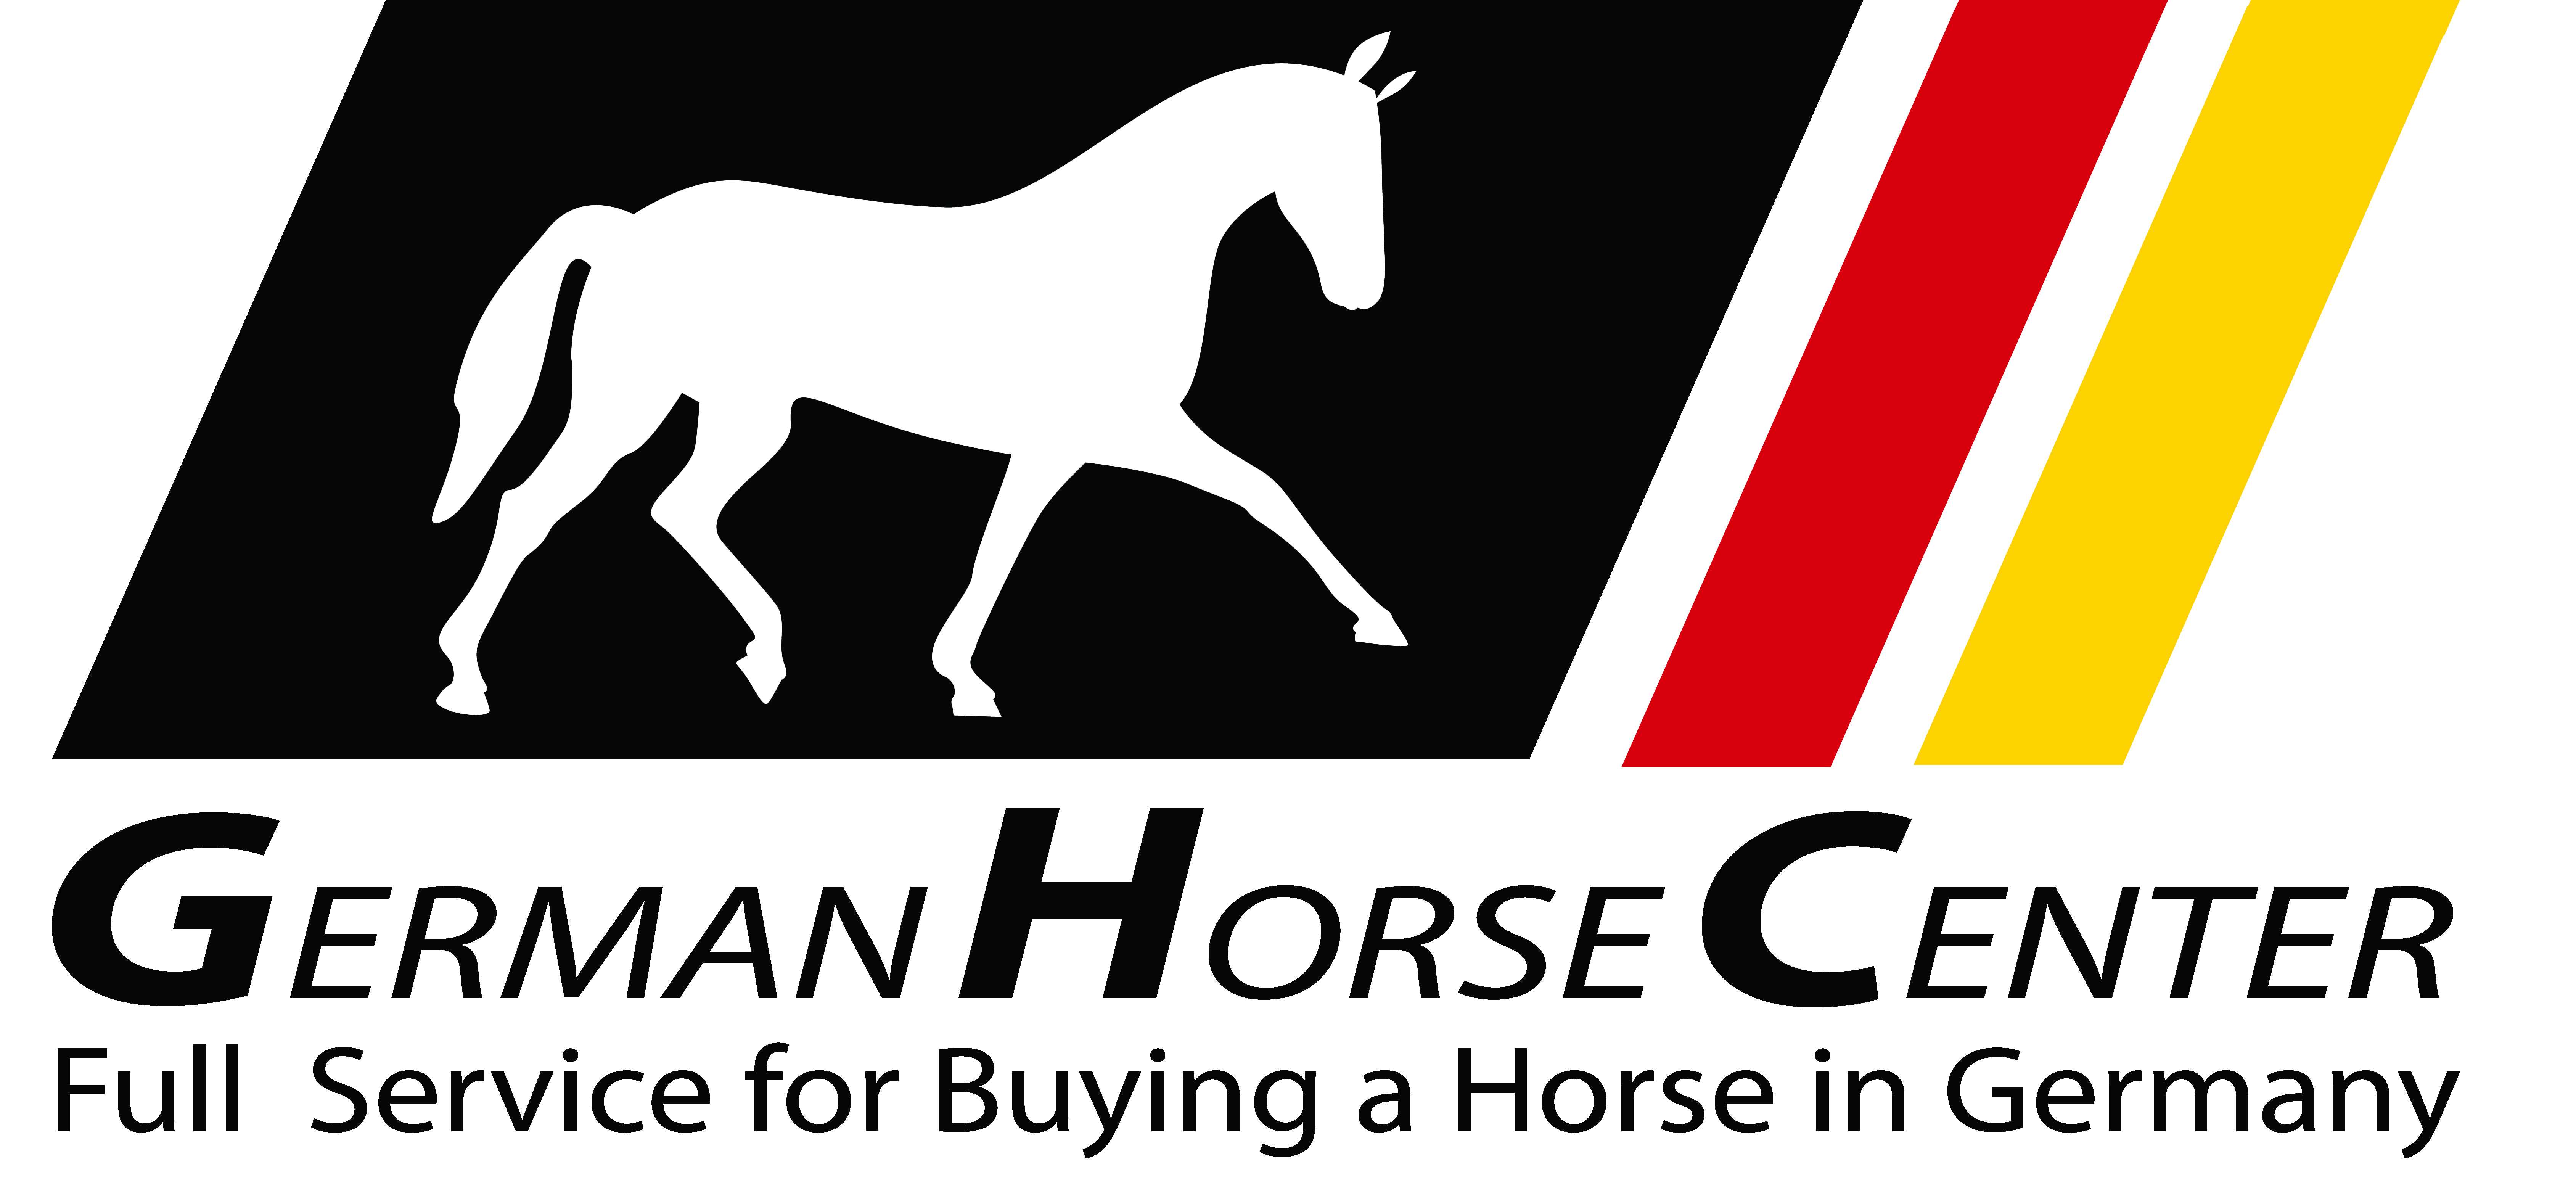 German Logo - Corporate Information Horse Center